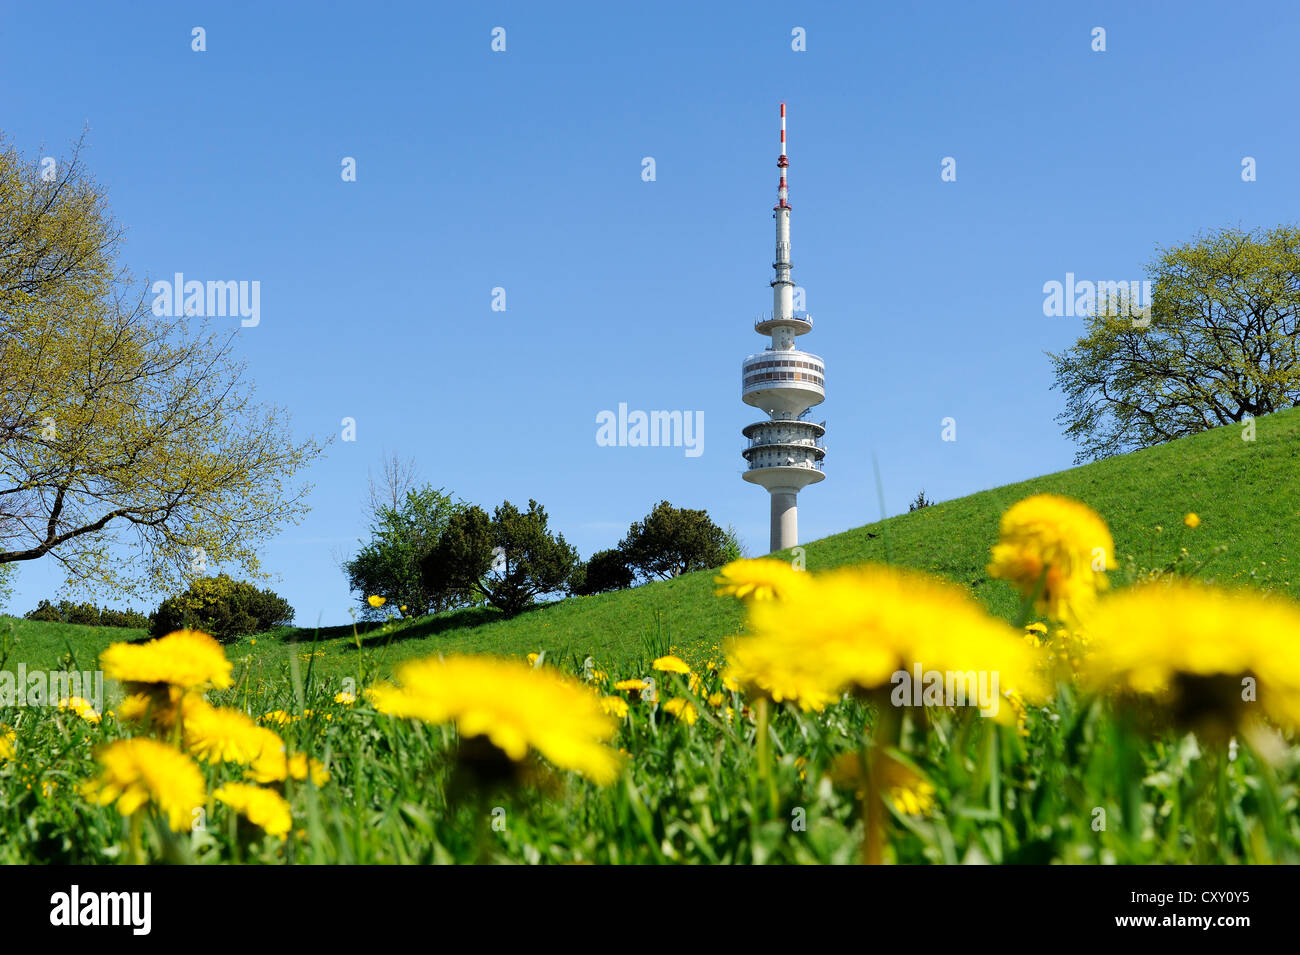 TV Tower, Olympiaturm Tower, Olympiapark, Munich, Bavaria, PublicGround Stock Photo